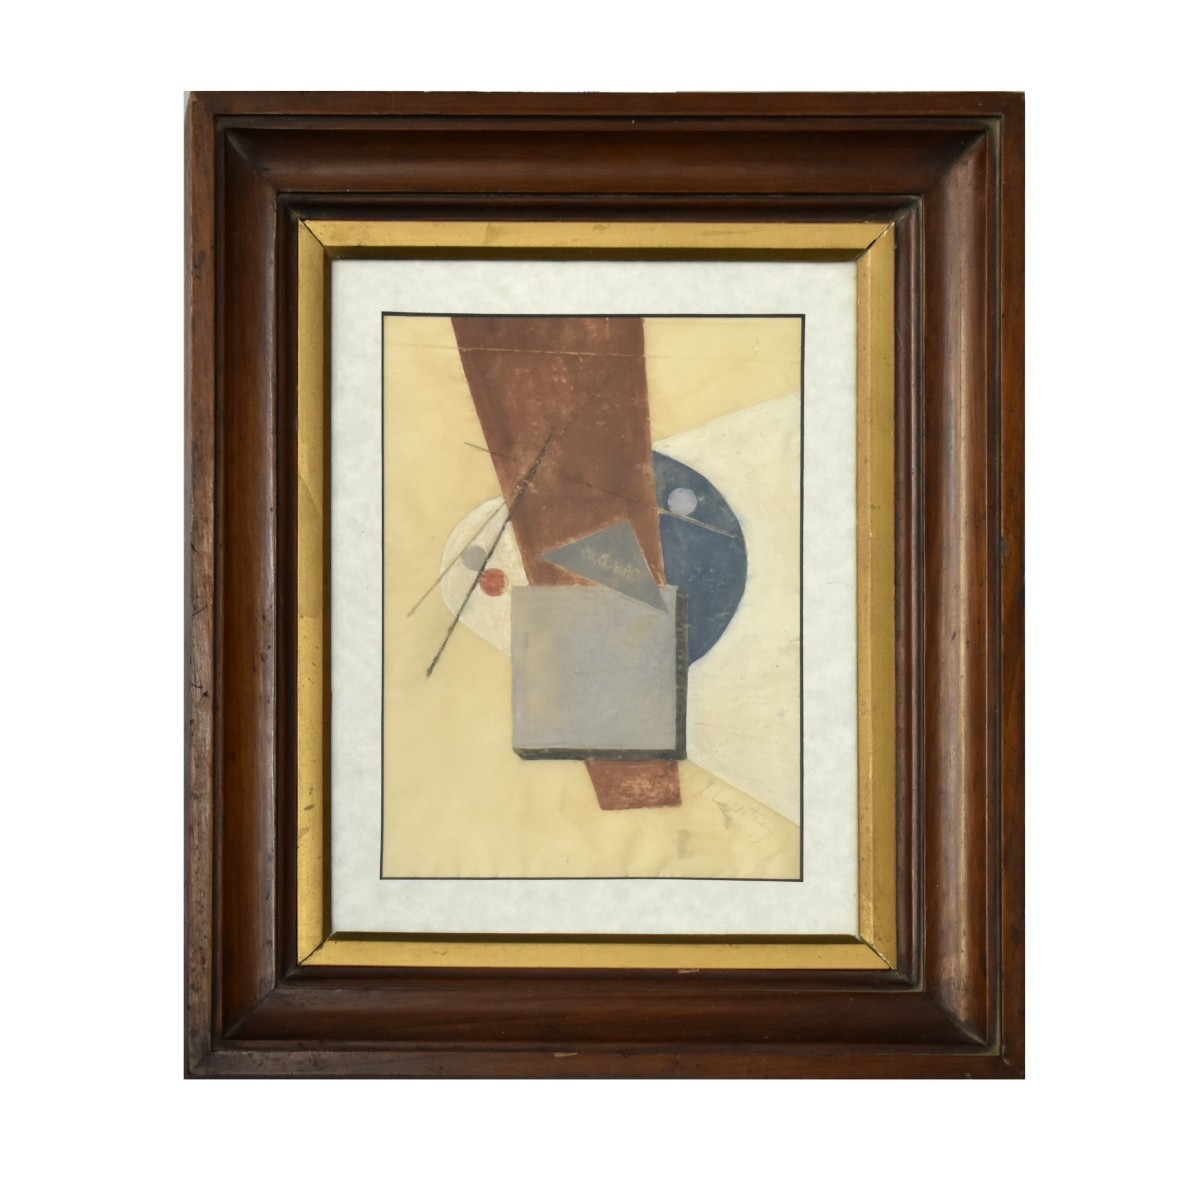 Attrib: Lazar Markovitch Lissitzky (1890 - 1941)